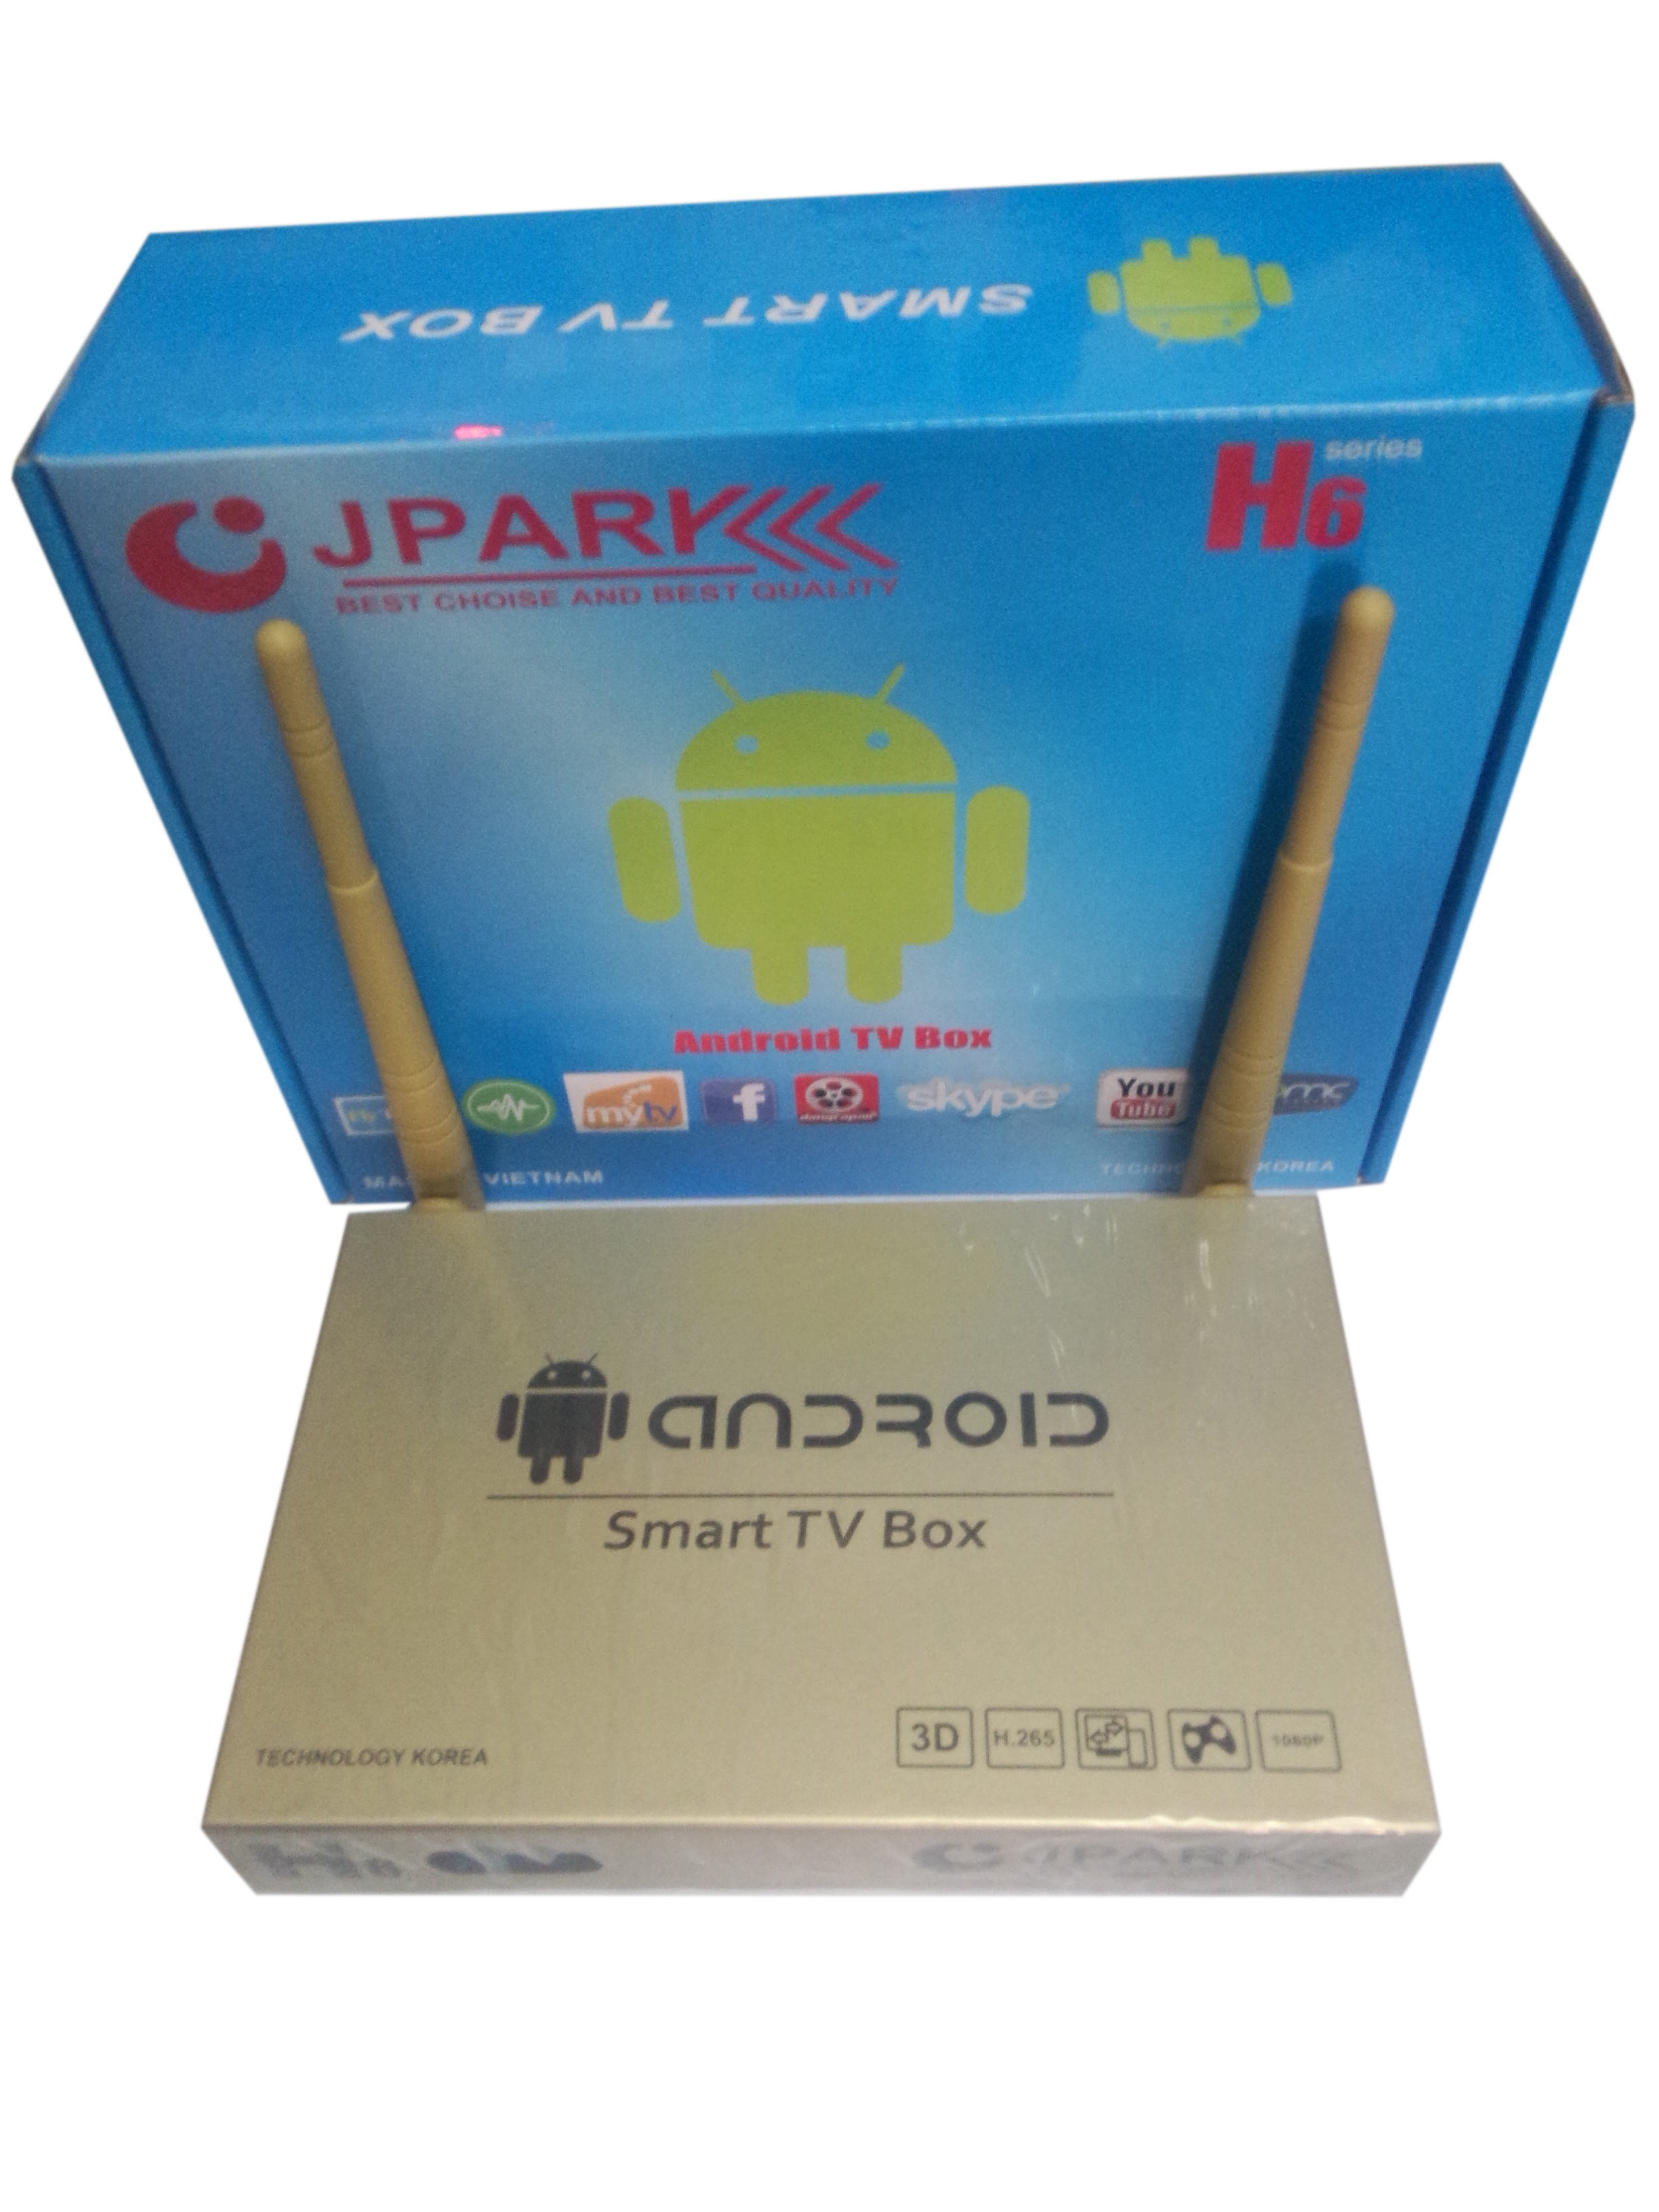 SMART TV BOX